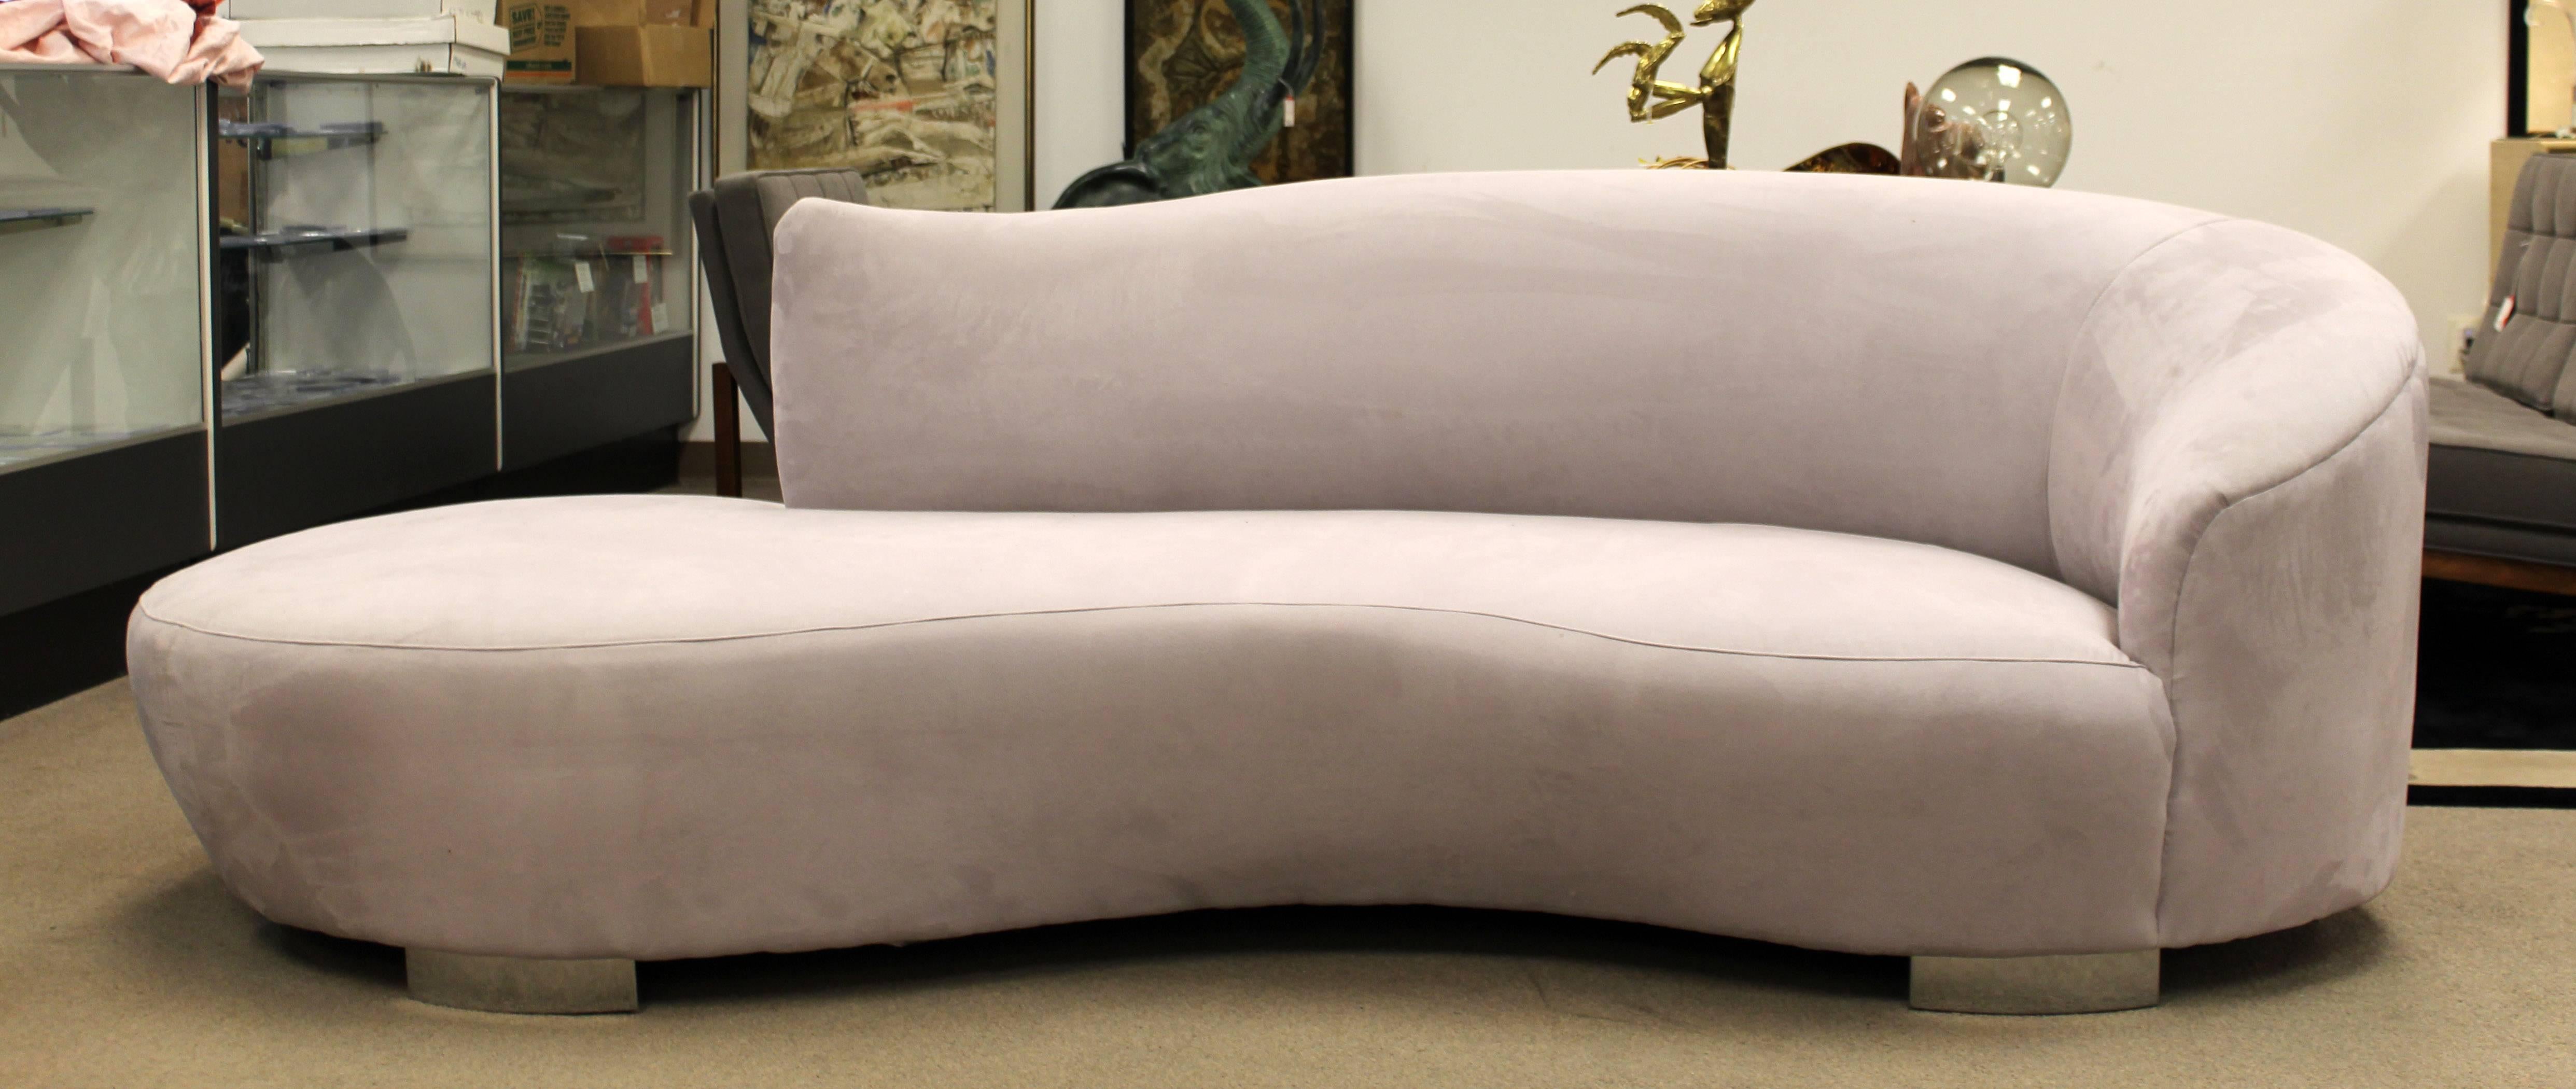 Mid-Century Modern Vladimir Kagan Curved Cloud Sofa with Chrome Base 1